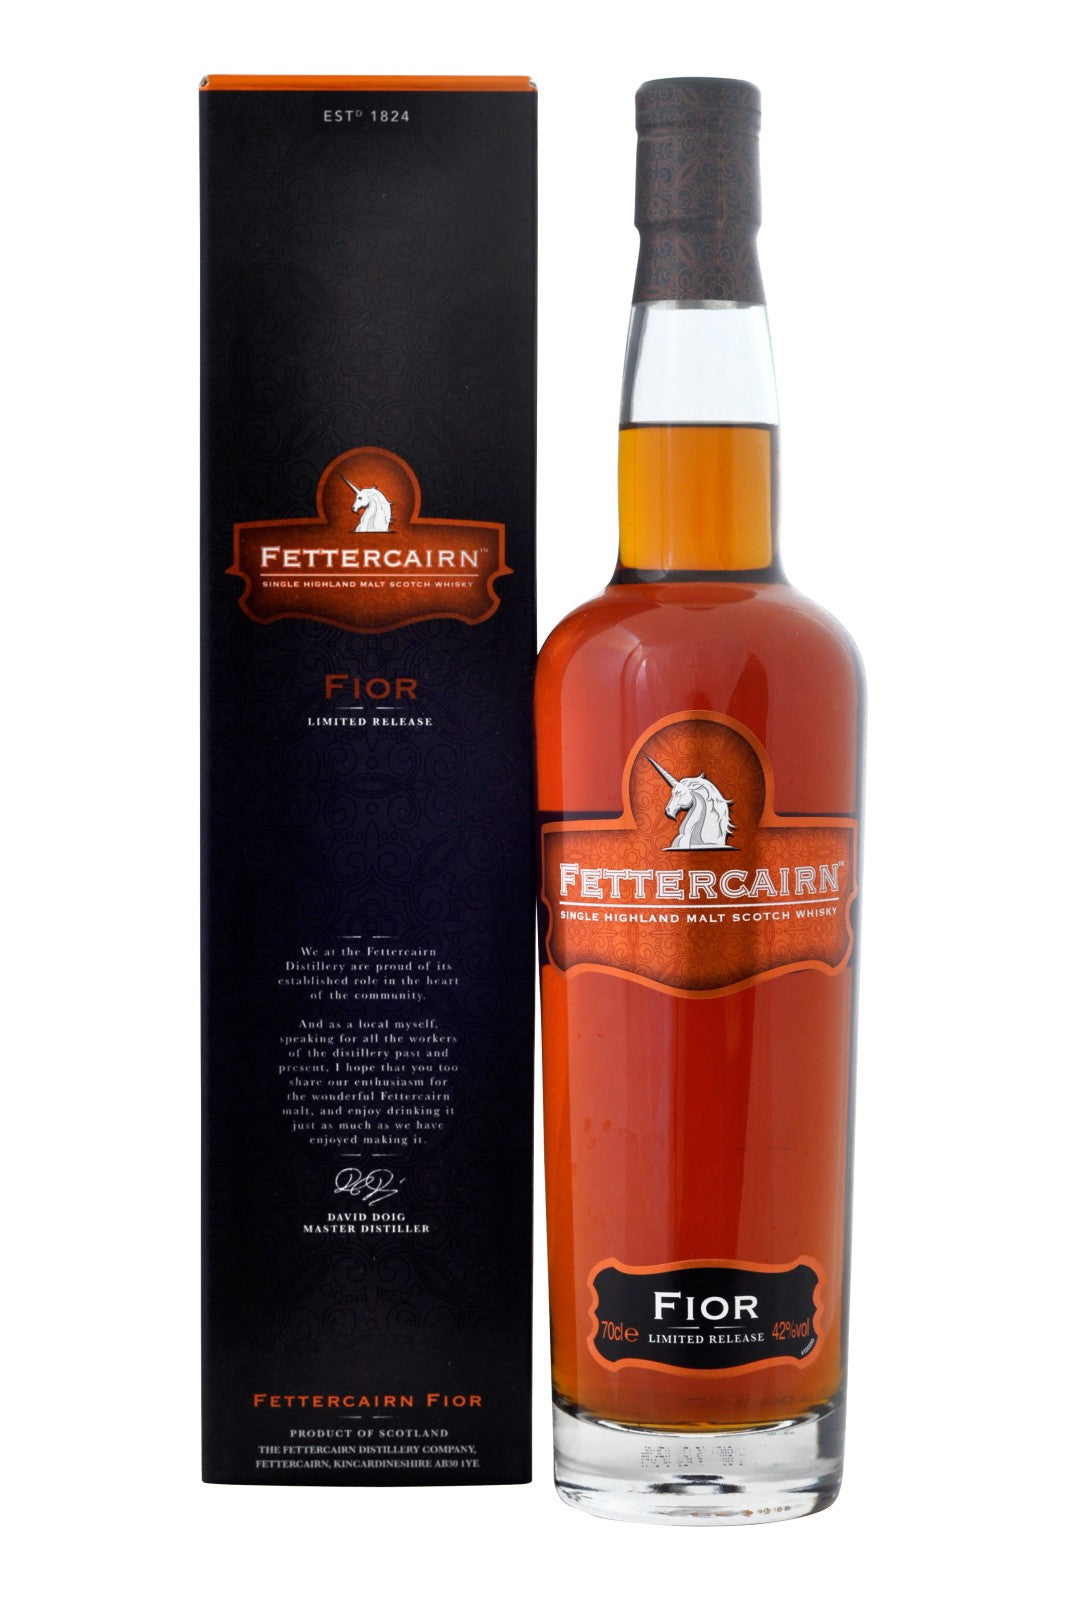 Fettercairn Fior Limited Release